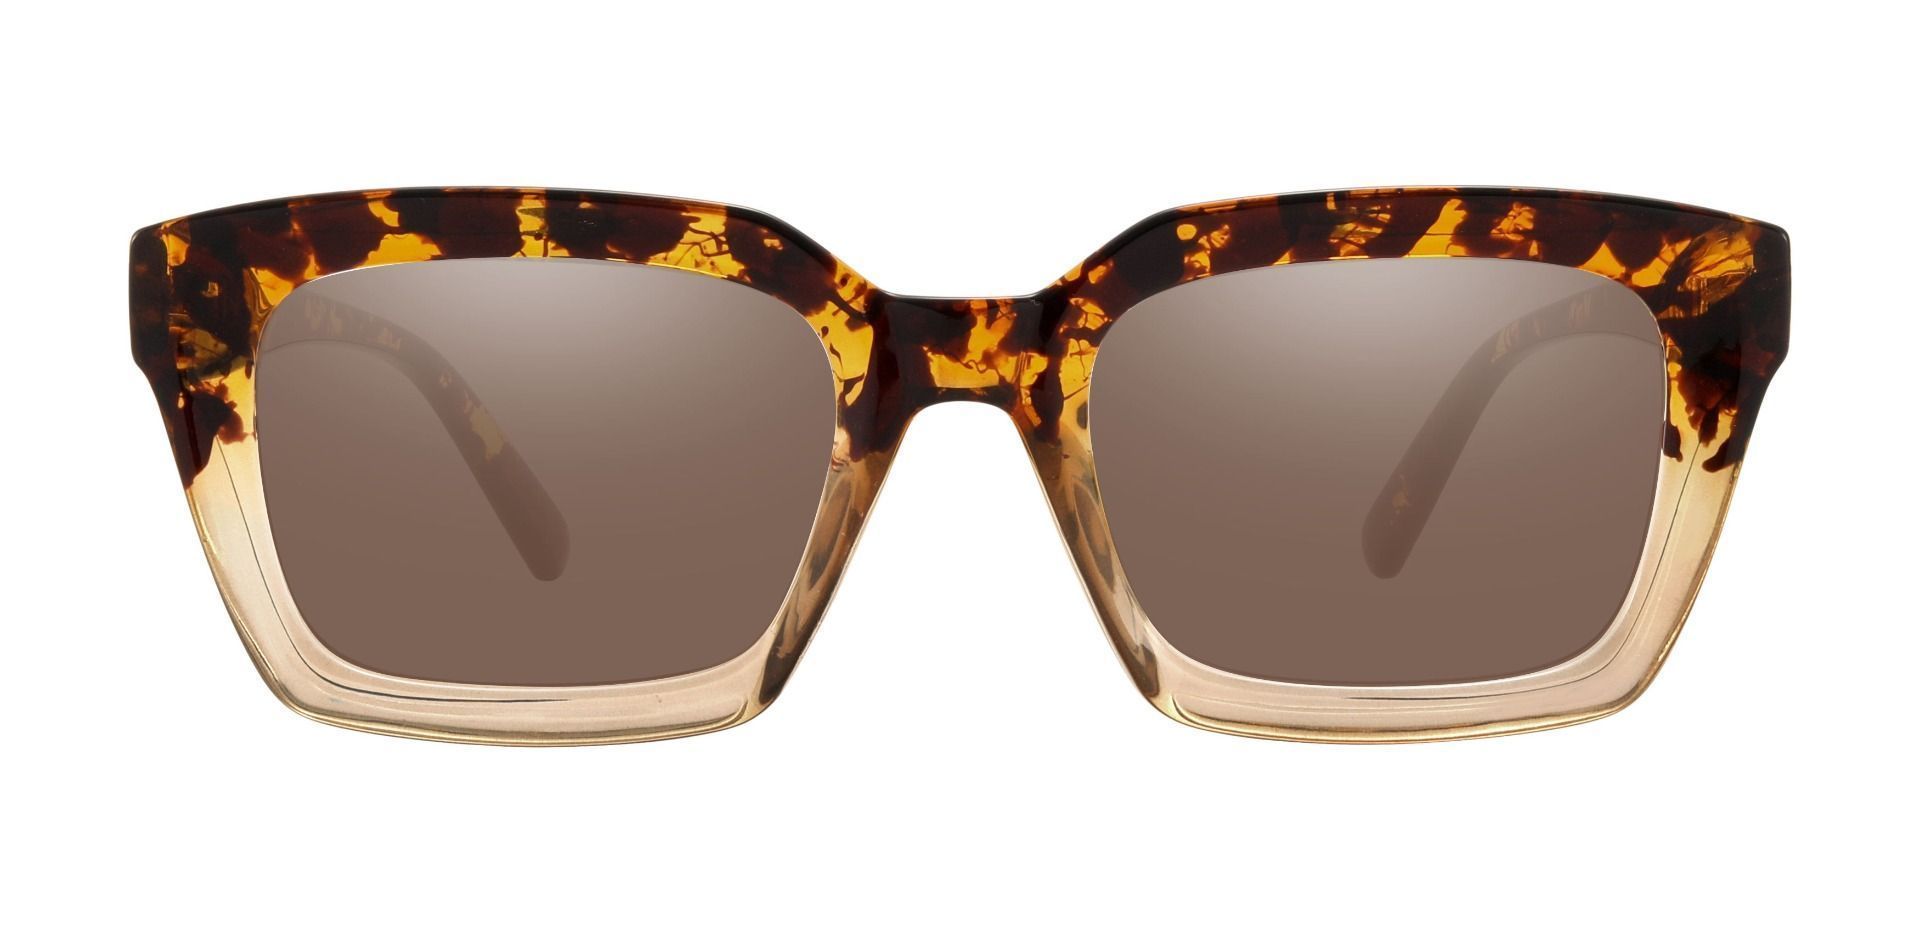 Unity Rectangle Prescription Sunglasses - Tortoise Frame With Brown Lenses